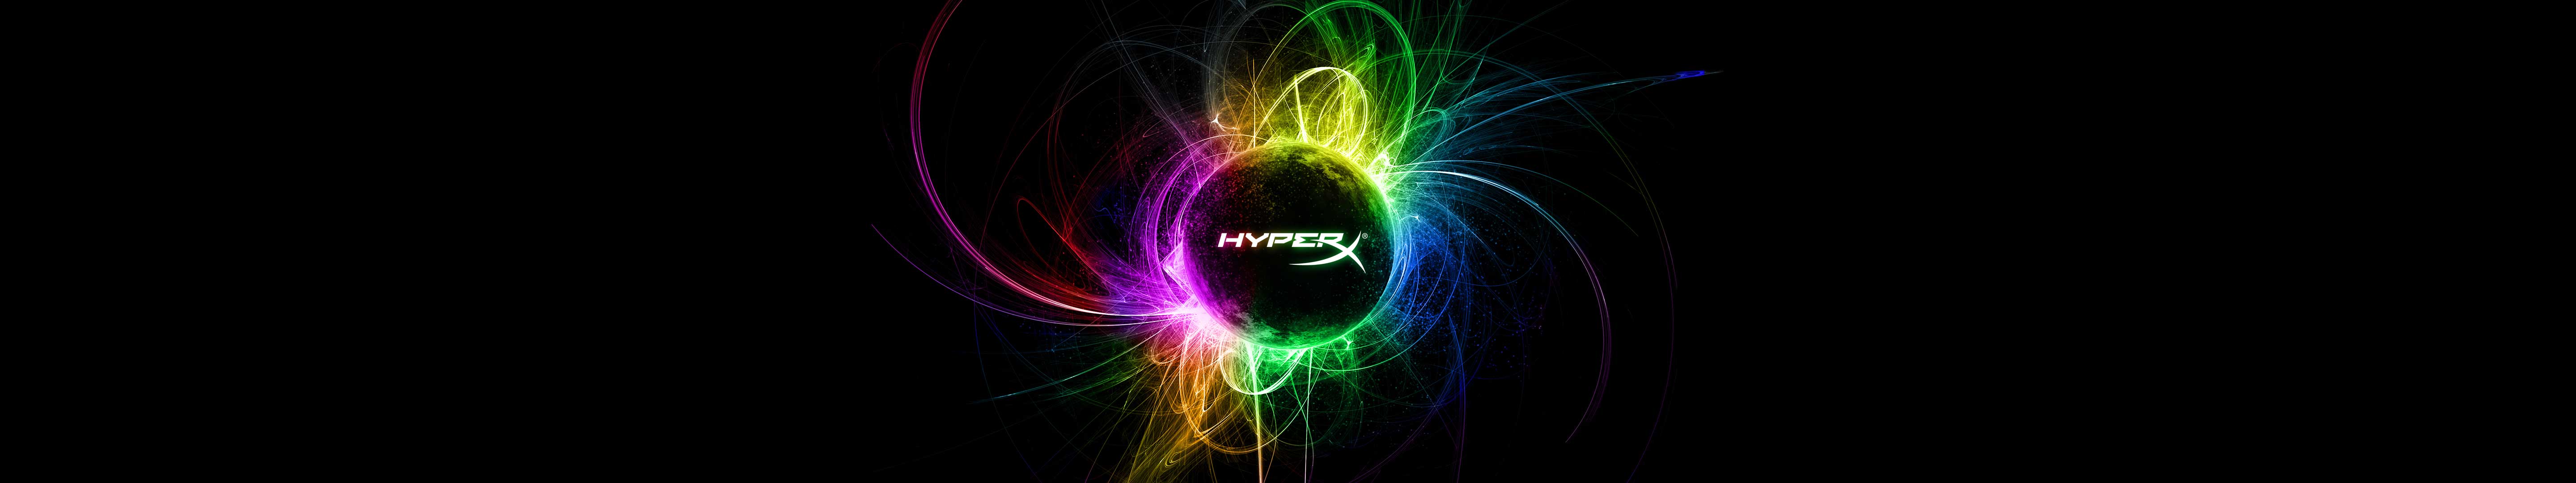 HyperX Wallpaper Download Pagehyperxgaming.com